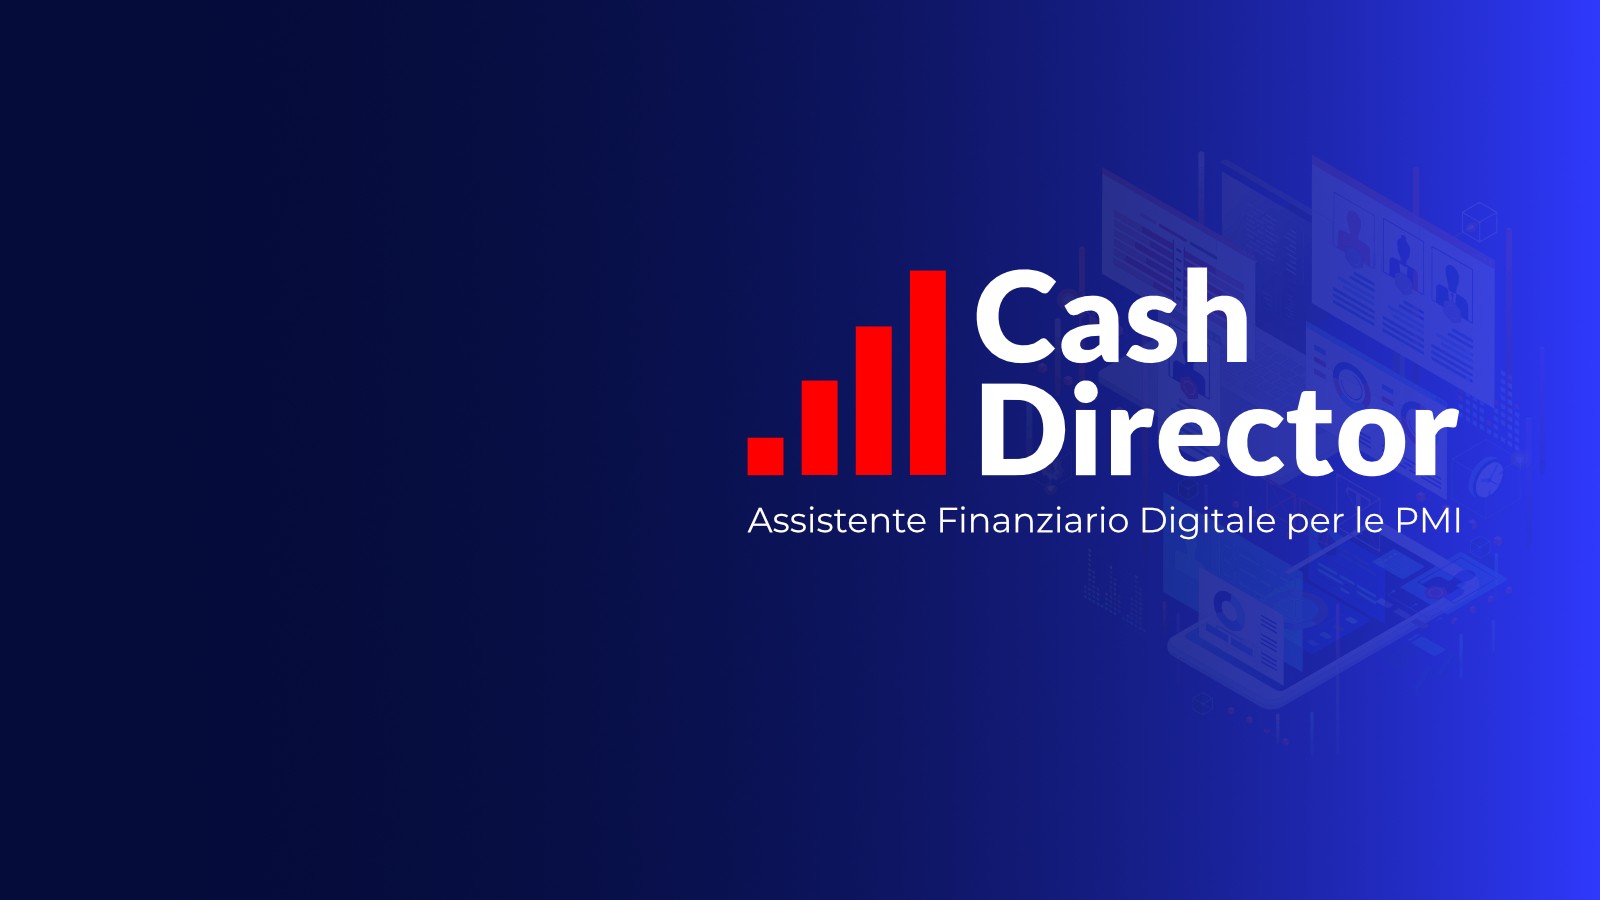 cash director marquee